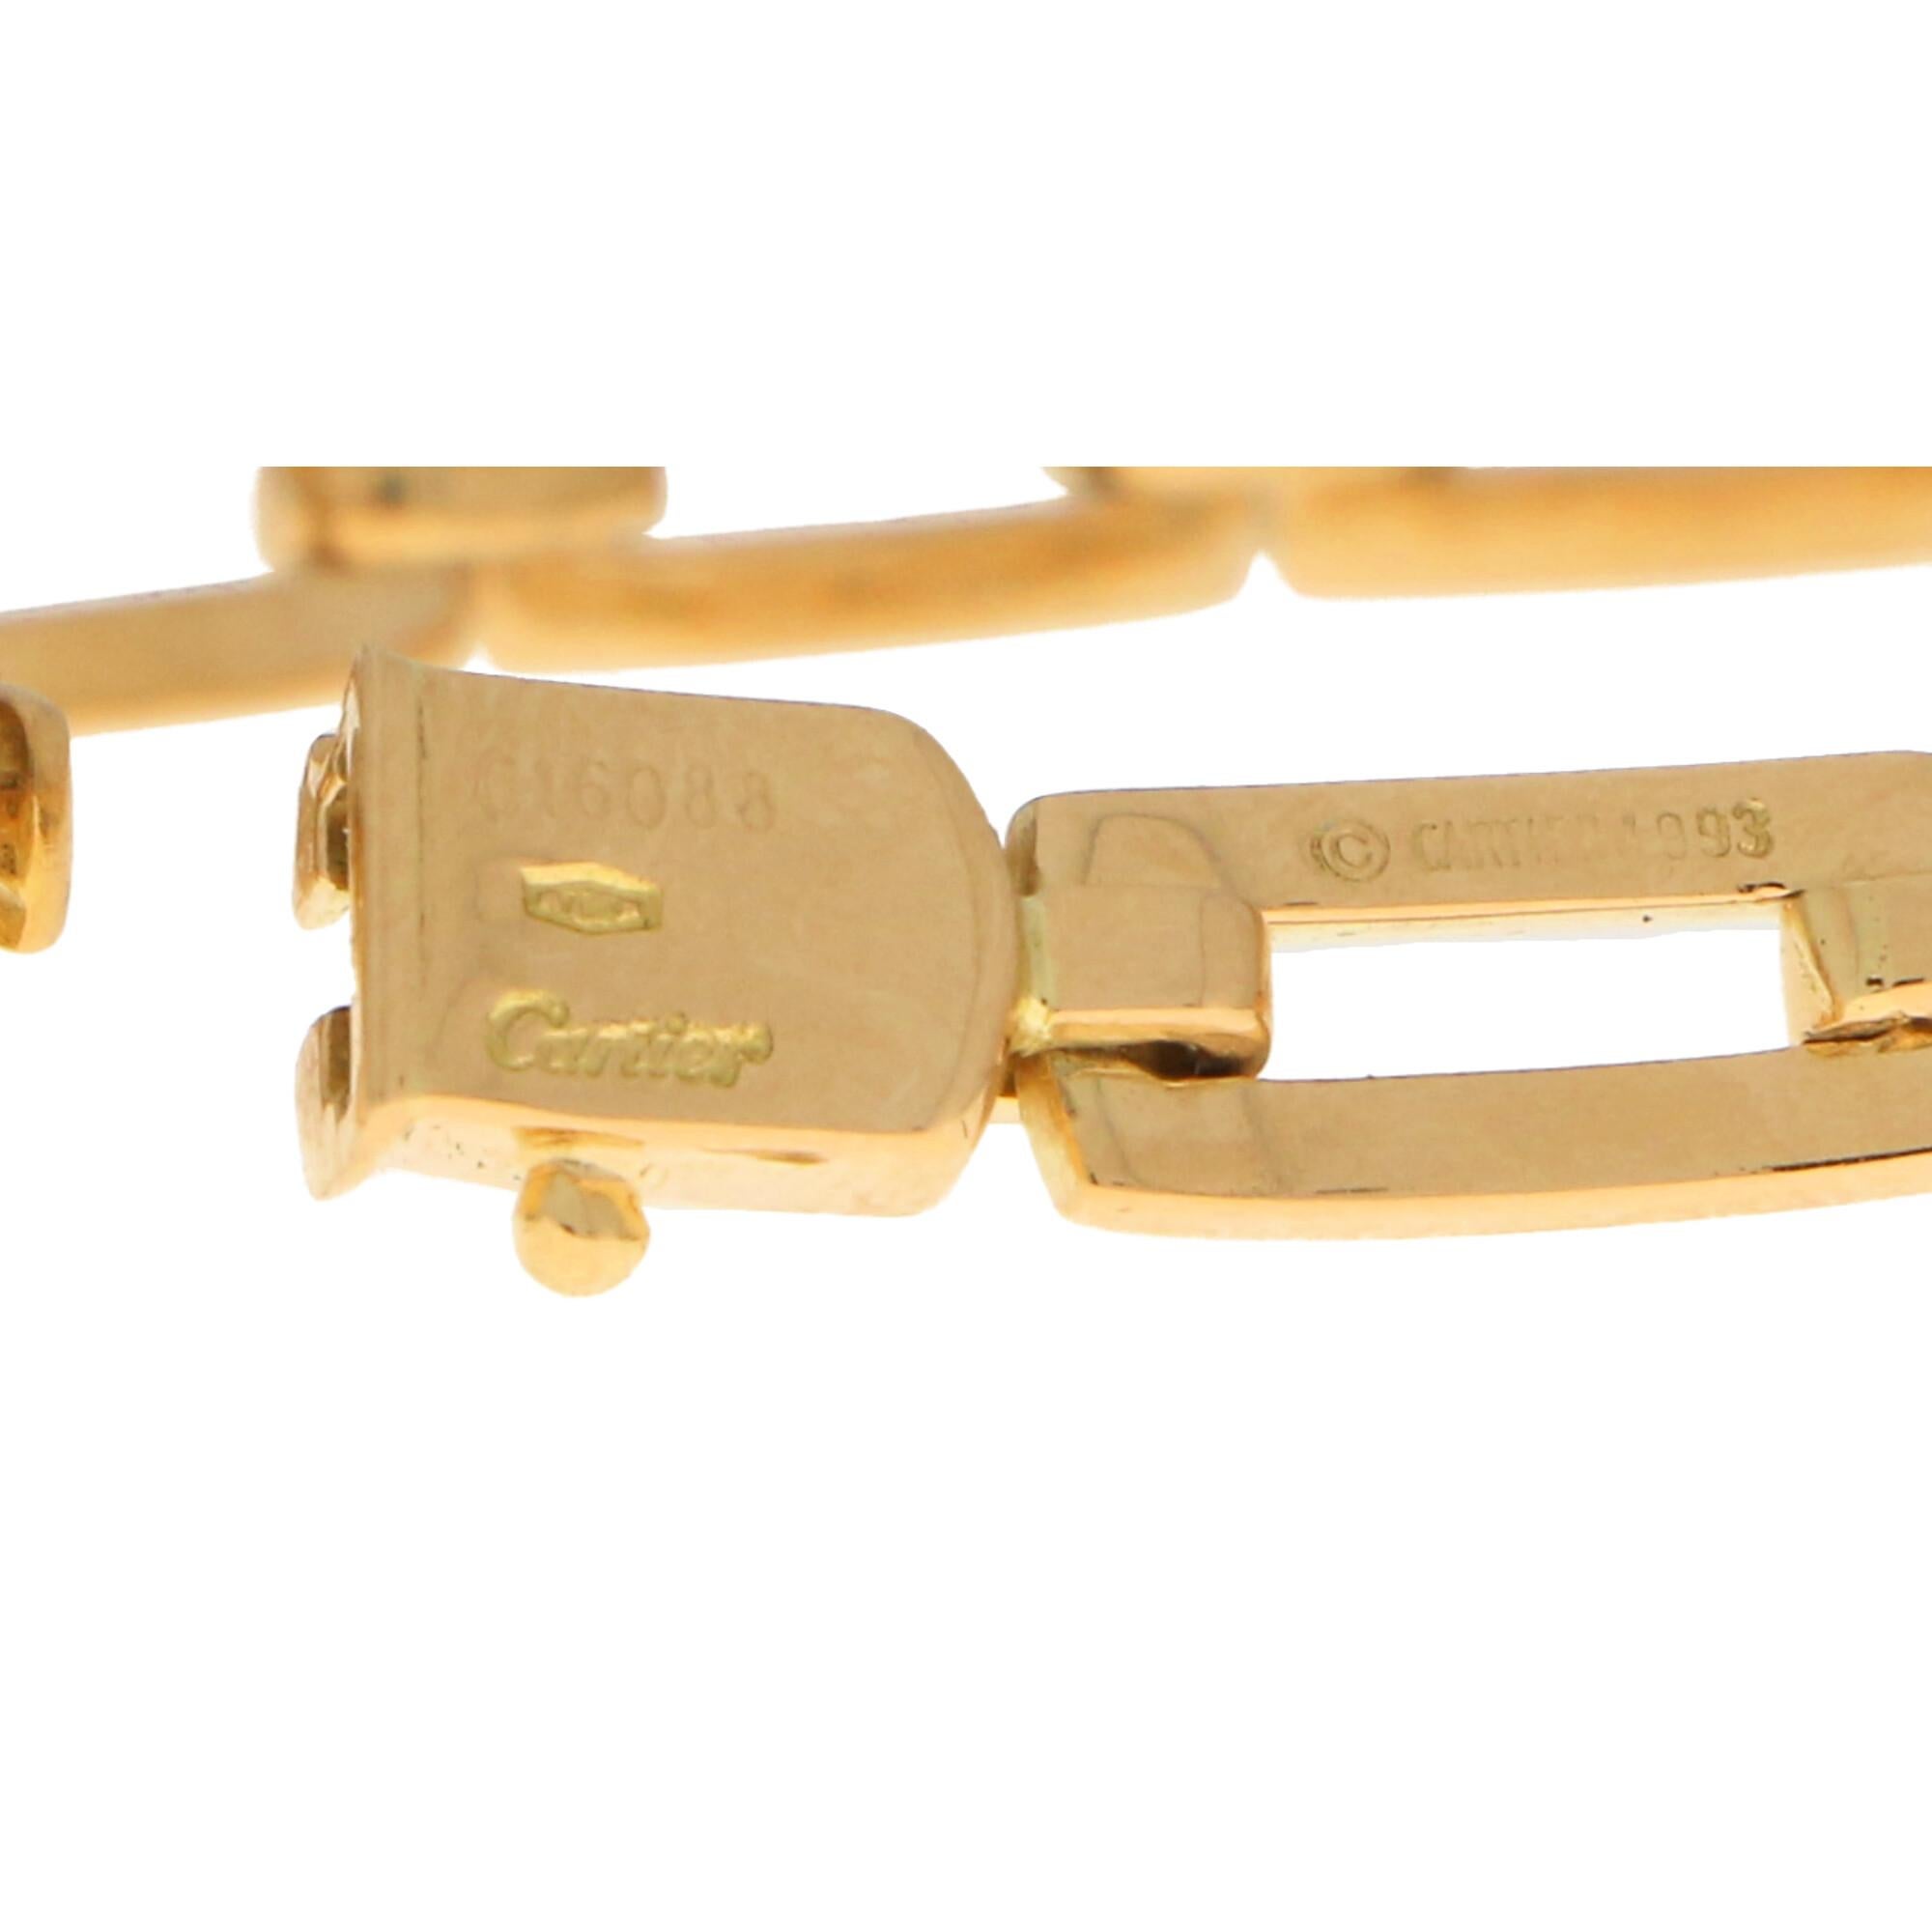 Retro Cartier Chain Link Bracelet in Solid 18 Karat Yellow Gold